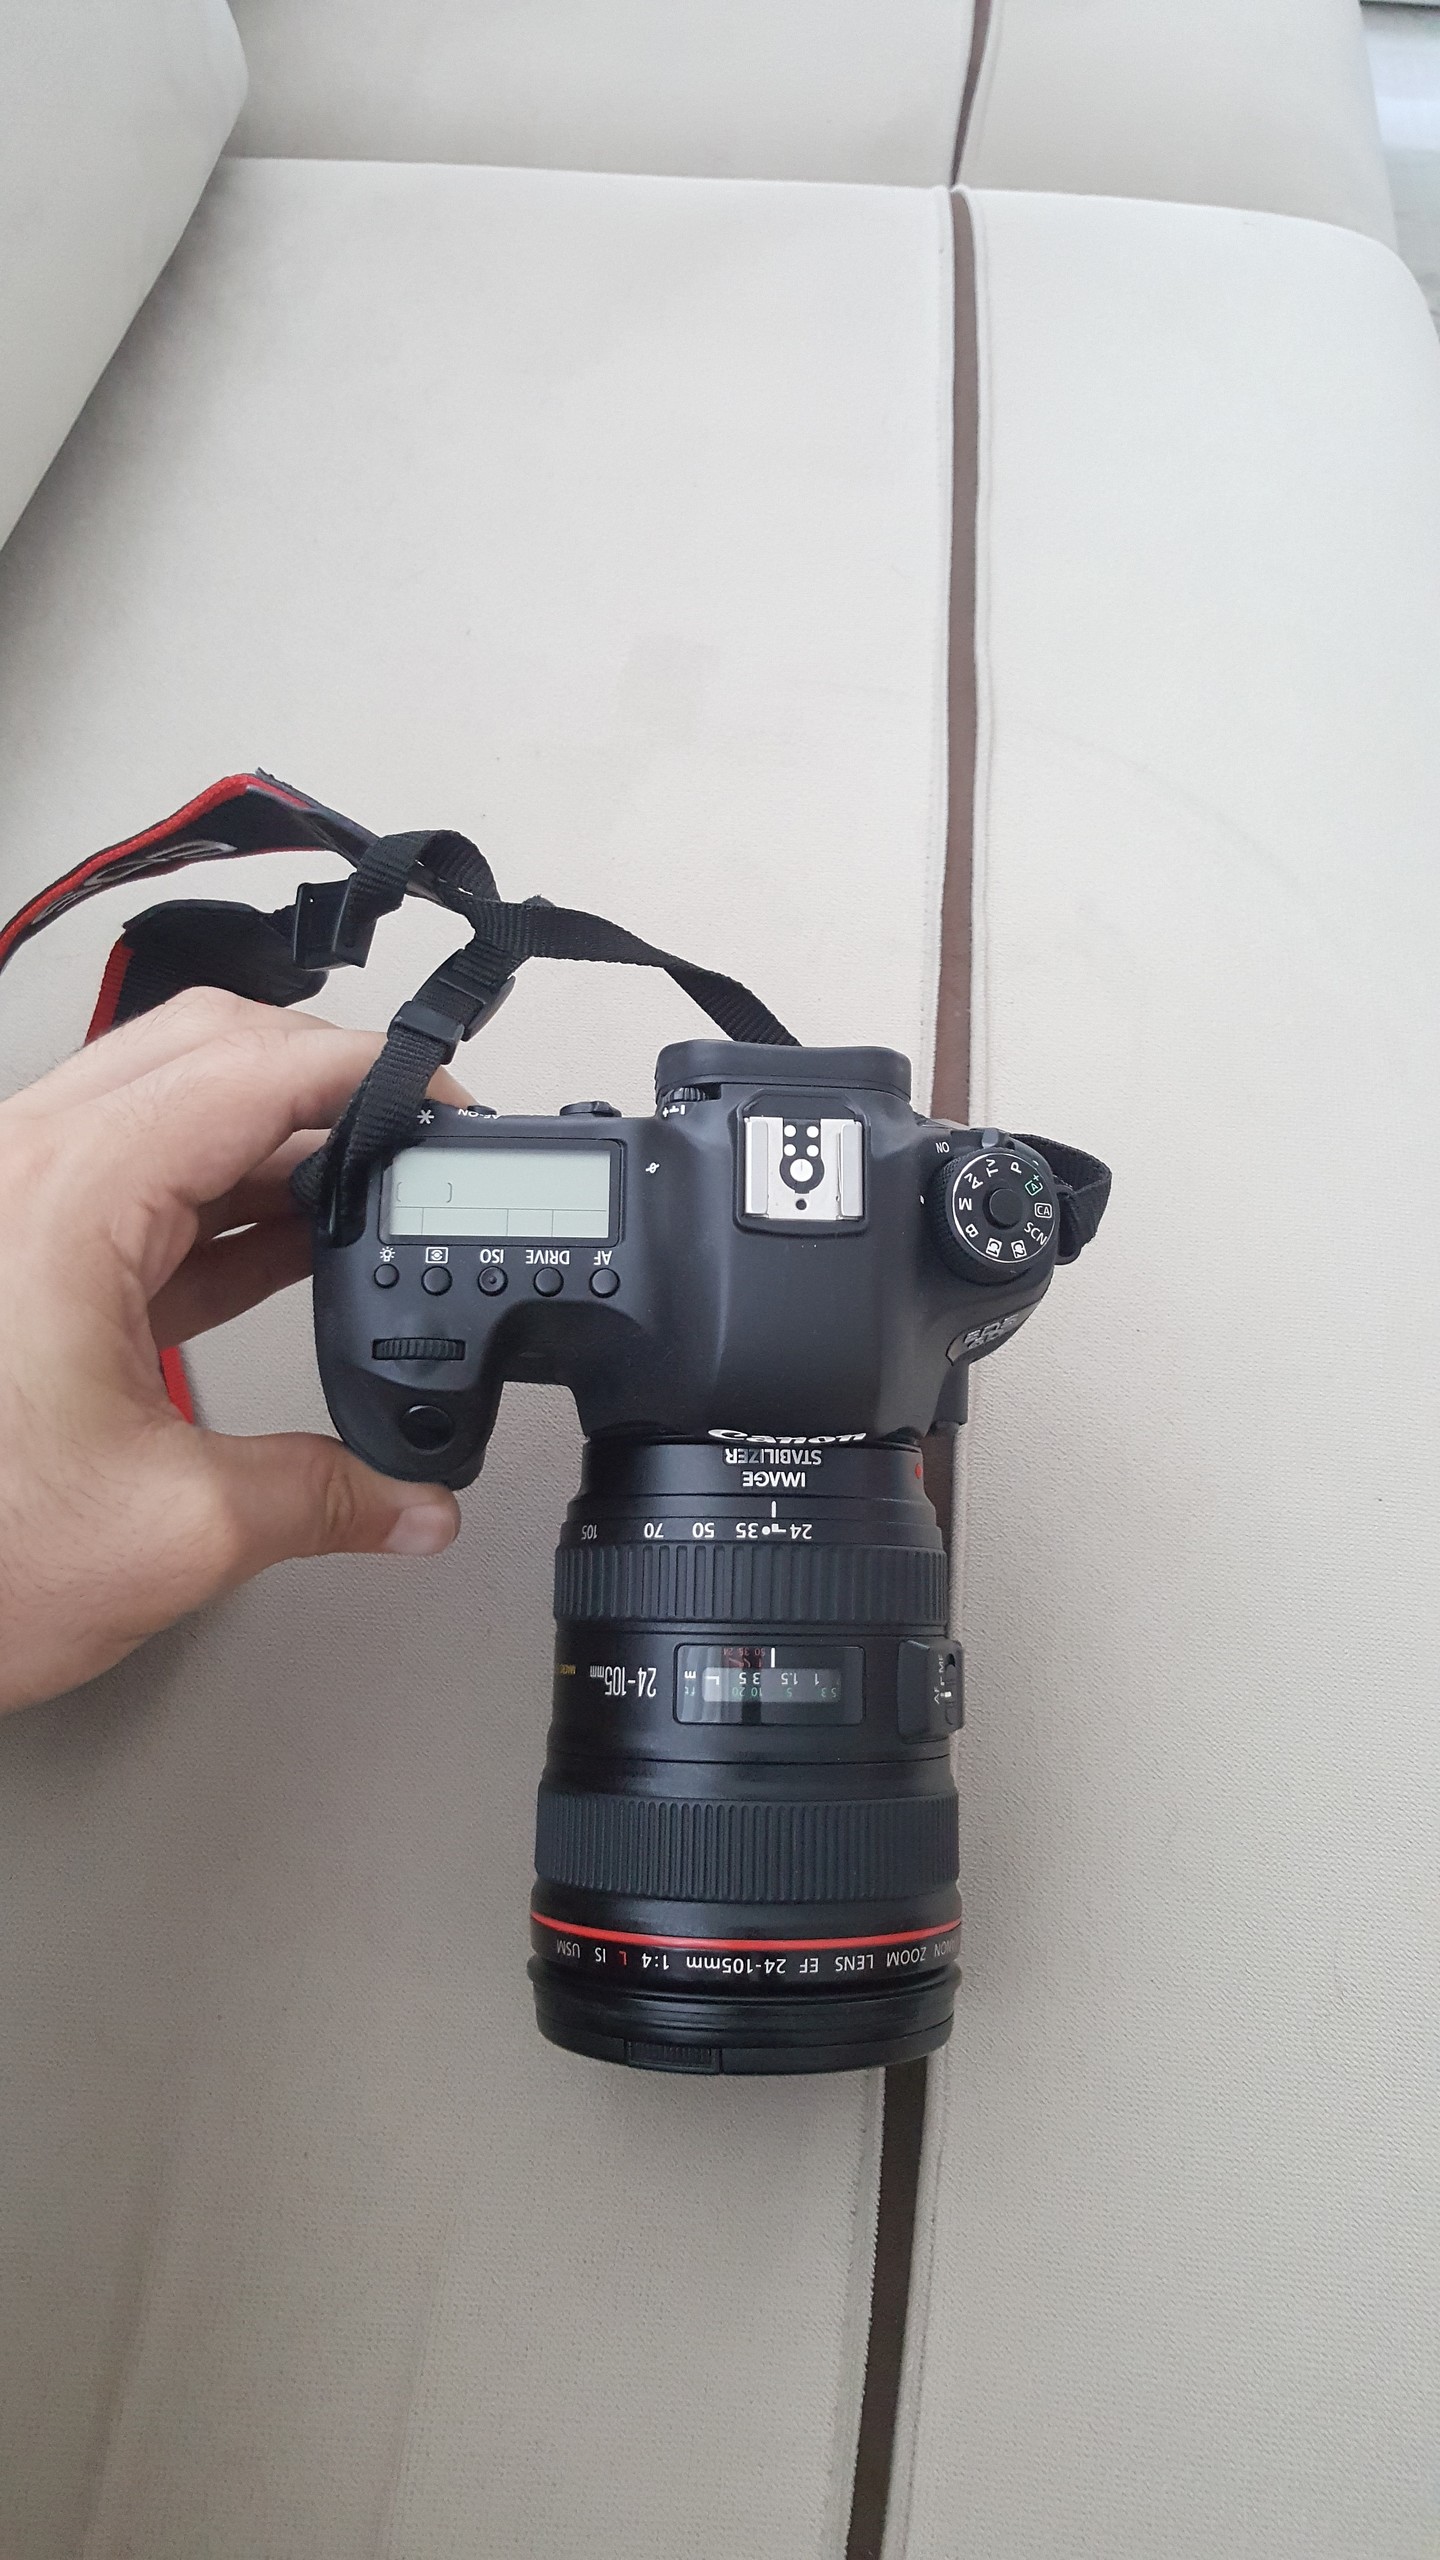  Canon 24-105 L ve 135mm f2 lens